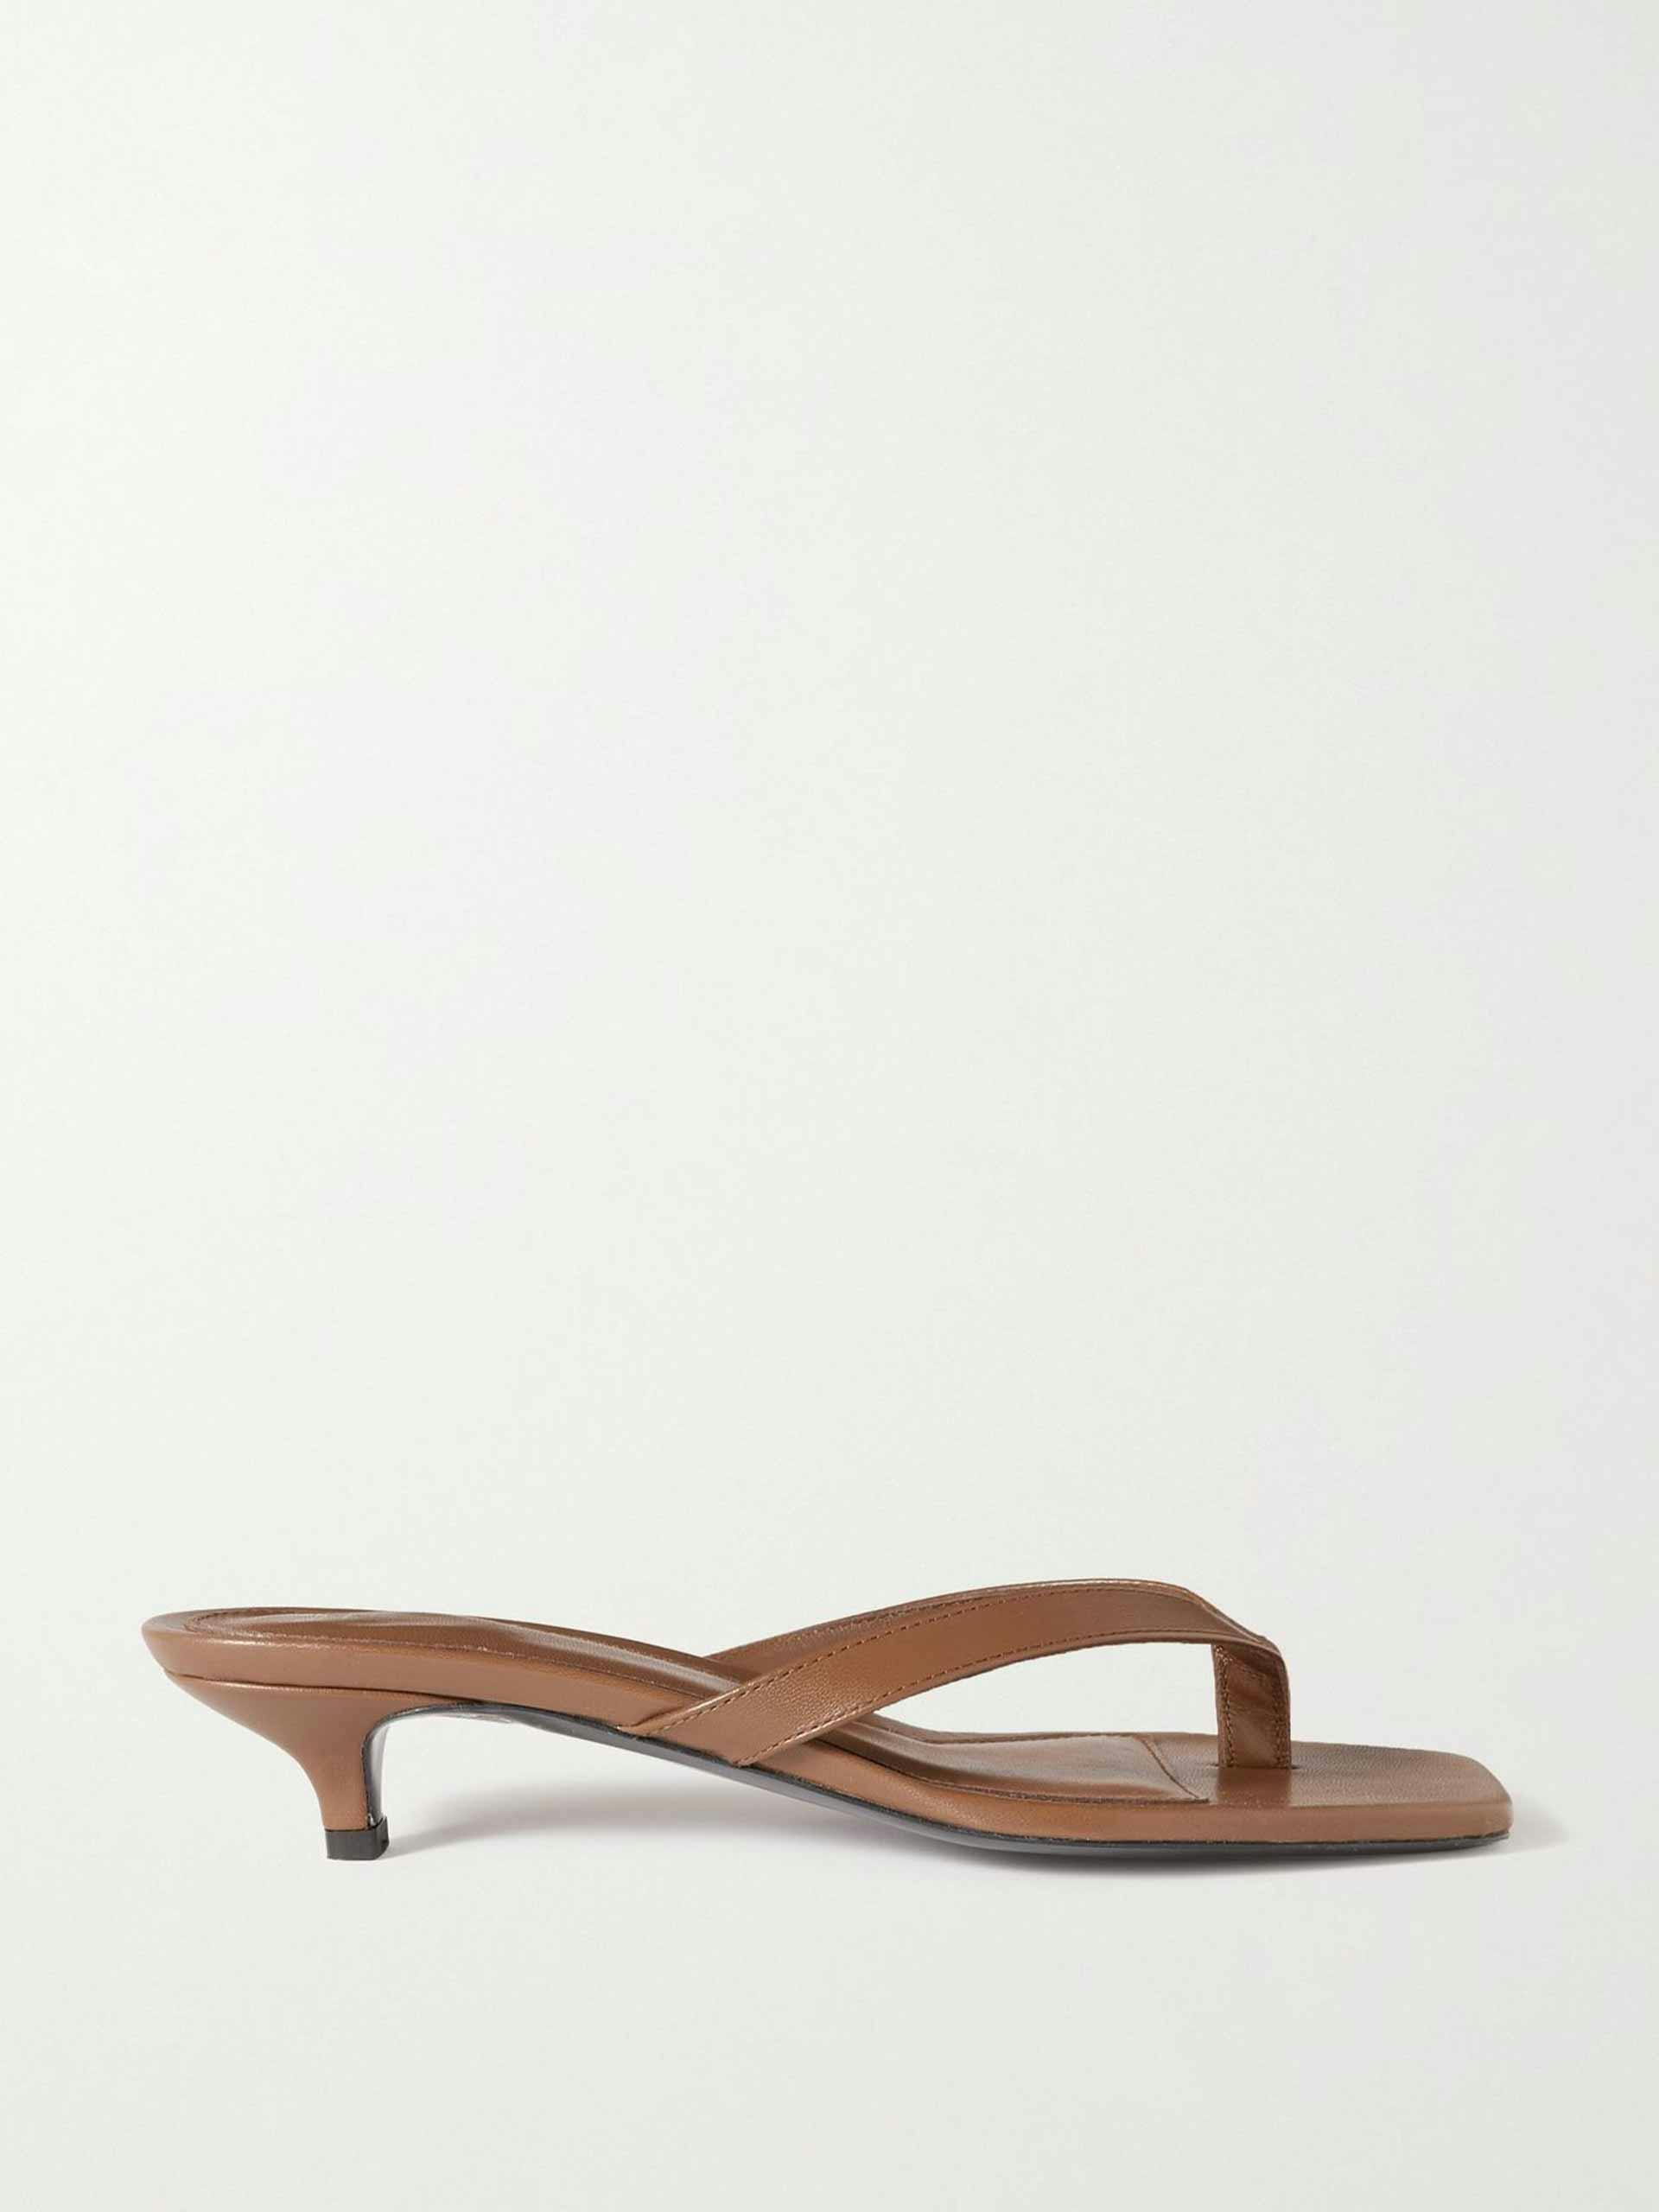 Brown leather flip flops